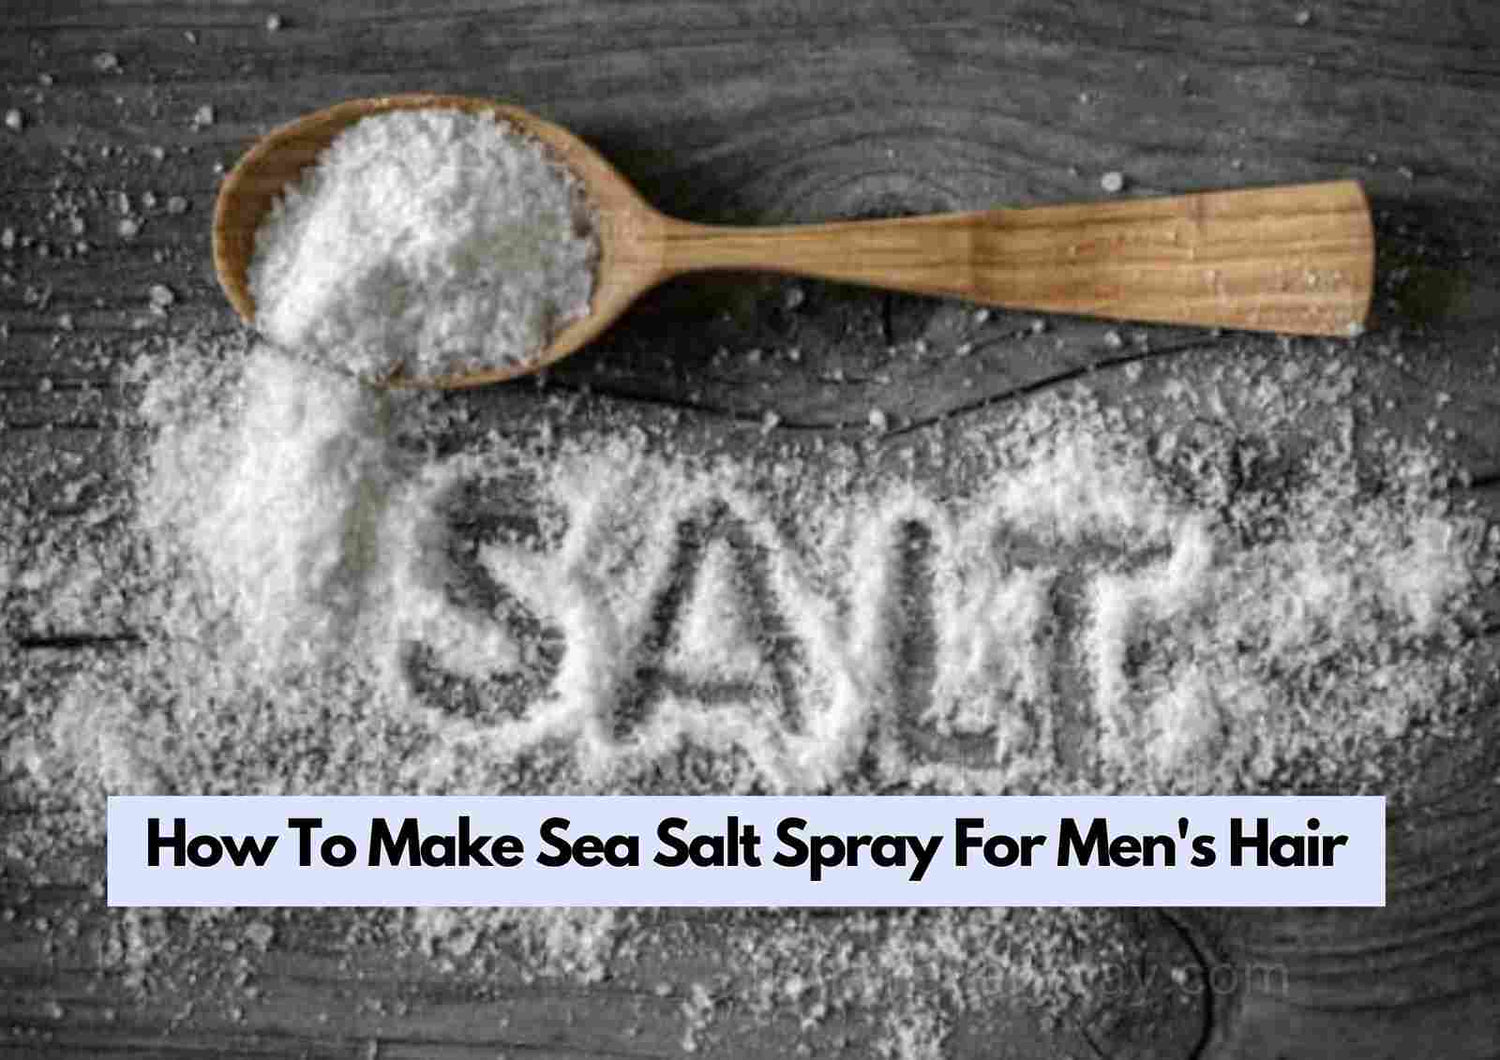 How To Make Sea Salt Spray For Men's Hair | 5 Easy Recipes, Benefits a ...